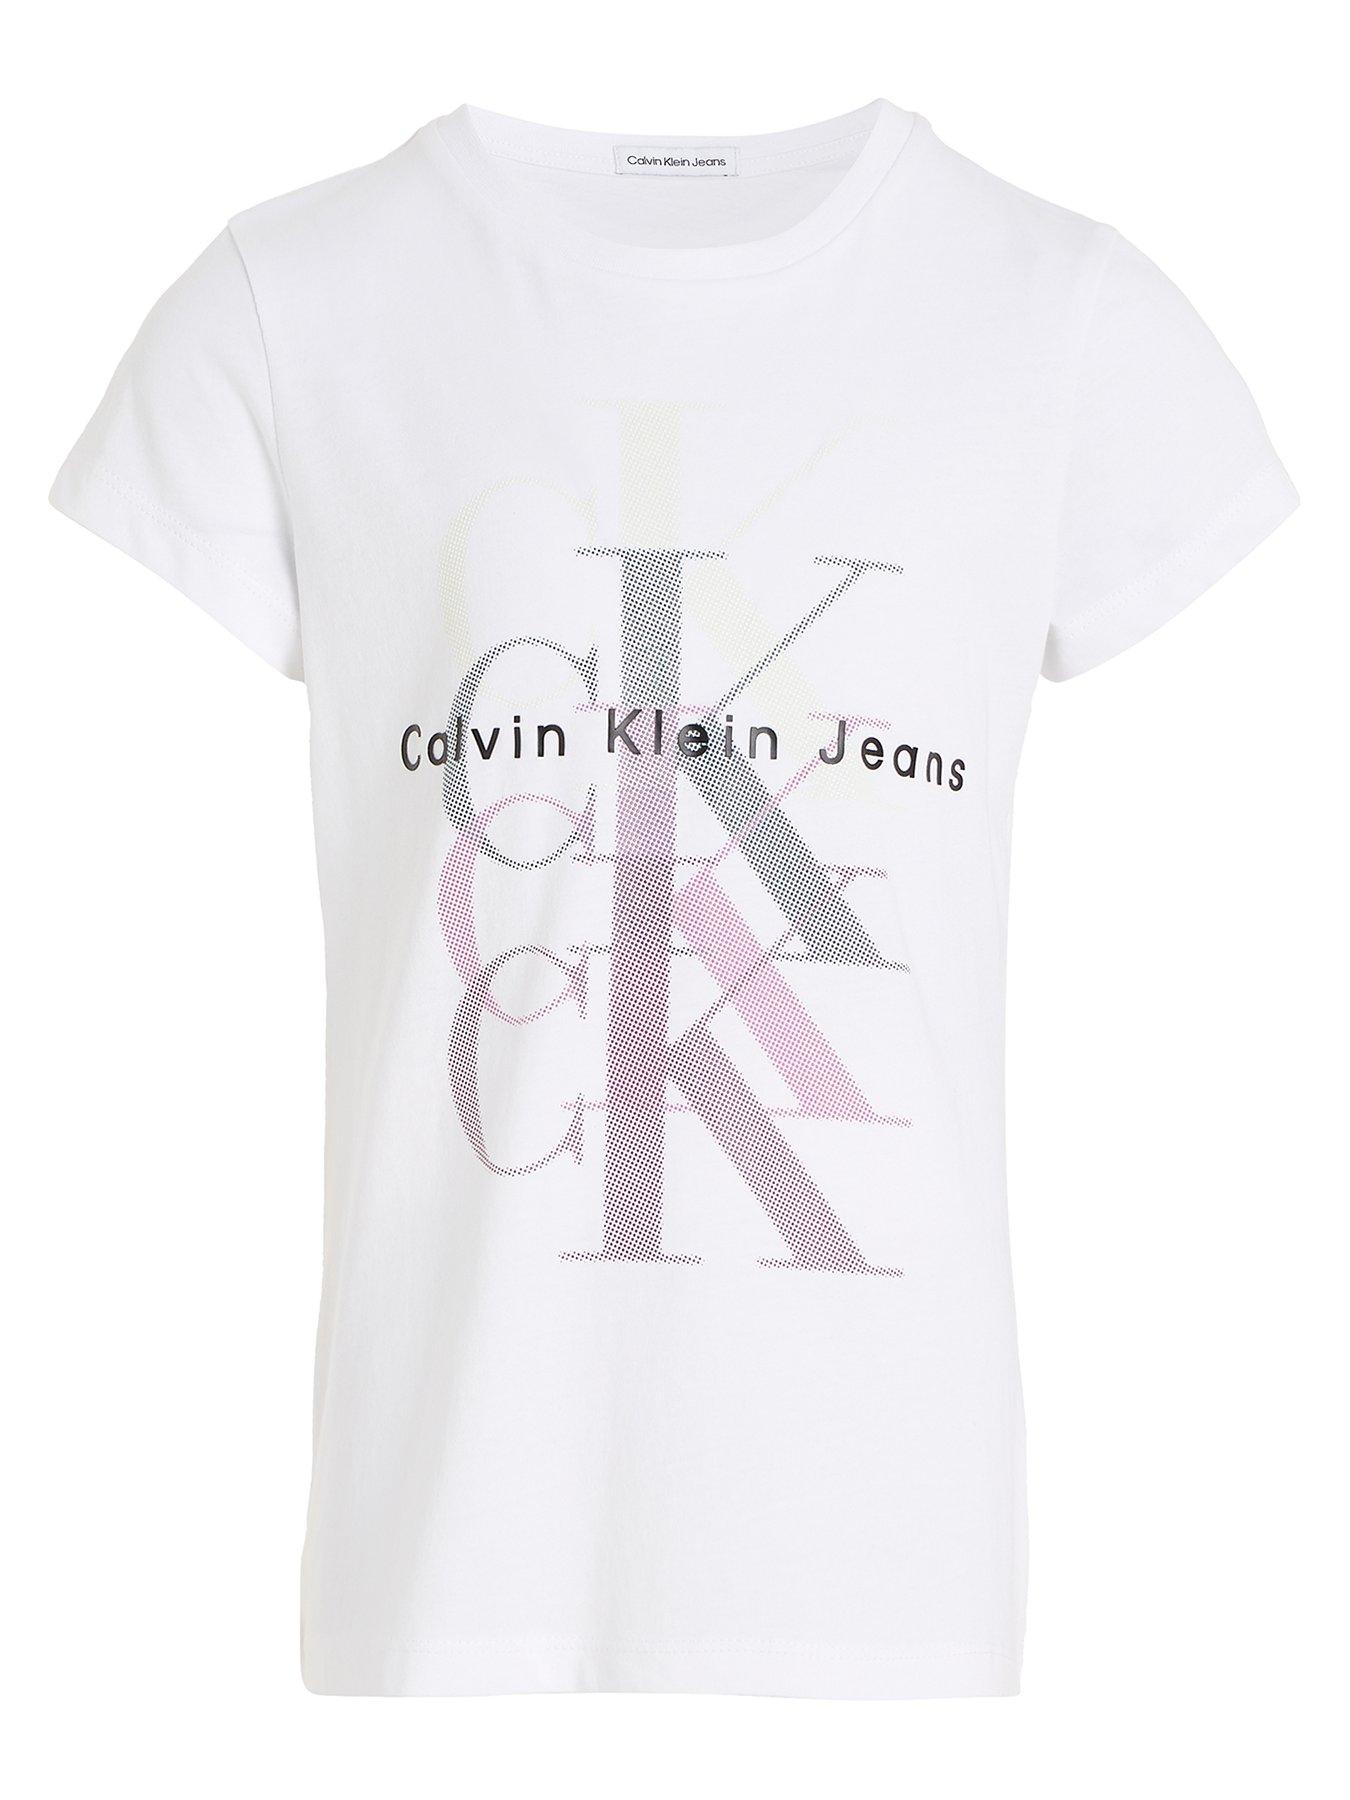 klein Calvin baby Tops & | | t-shirts Ireland Girls Very | Child & clothes |